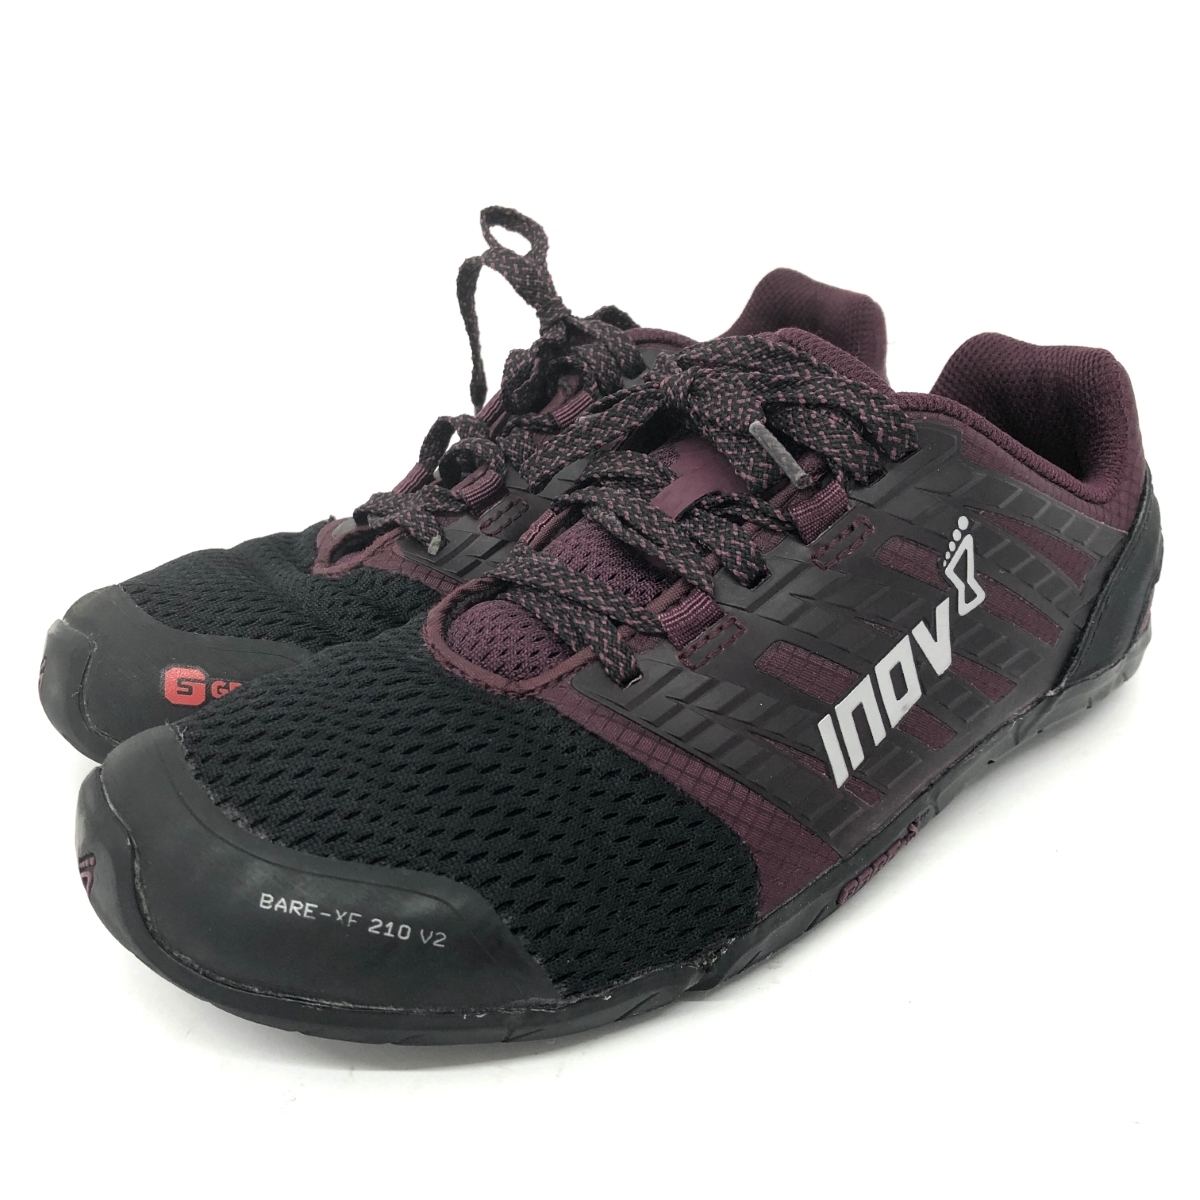 ◆inov-8 イノヴェイト スニーカー UK4◆BARE-XF210 V2 パープル レディース 靴 シューズ sneakers